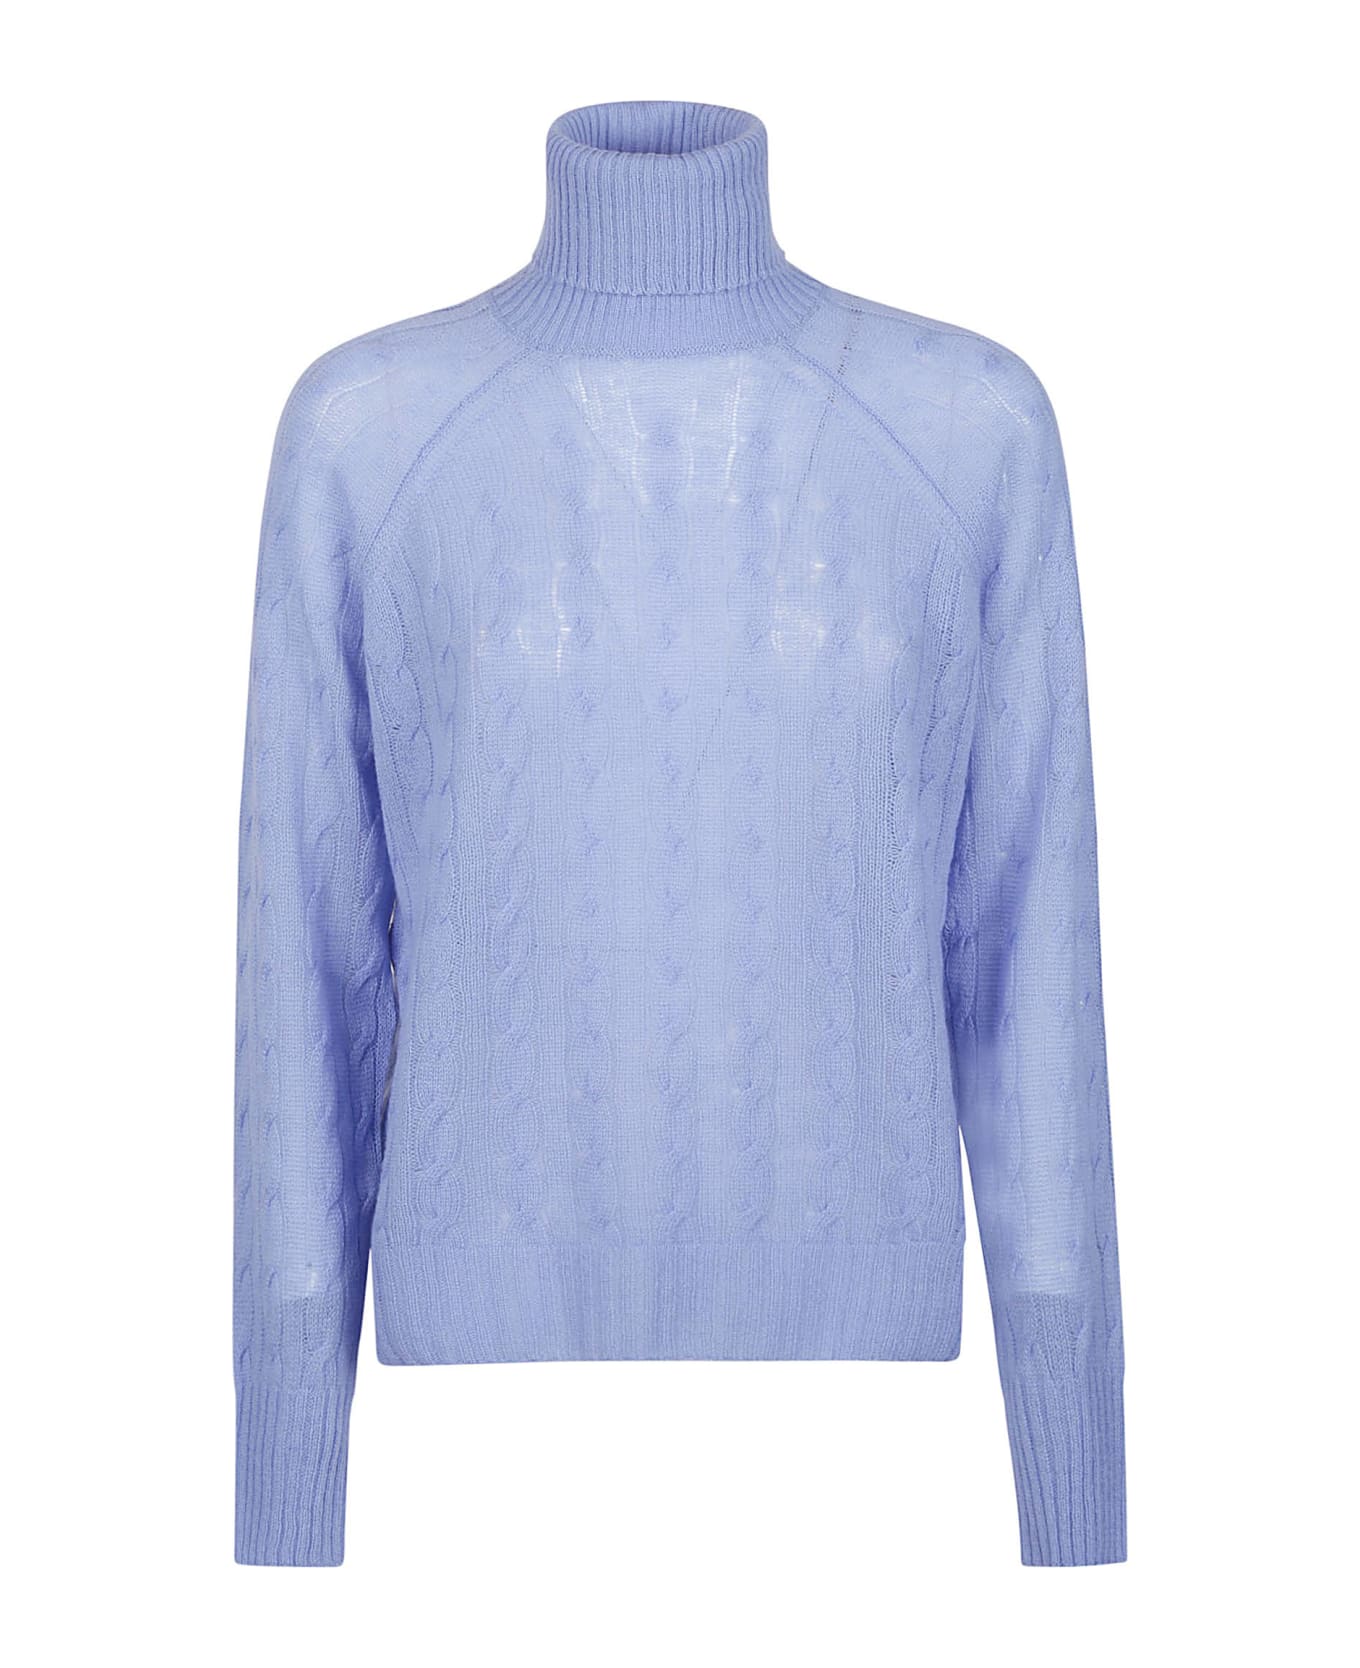 Etro Turtleneck Sweater - Blue